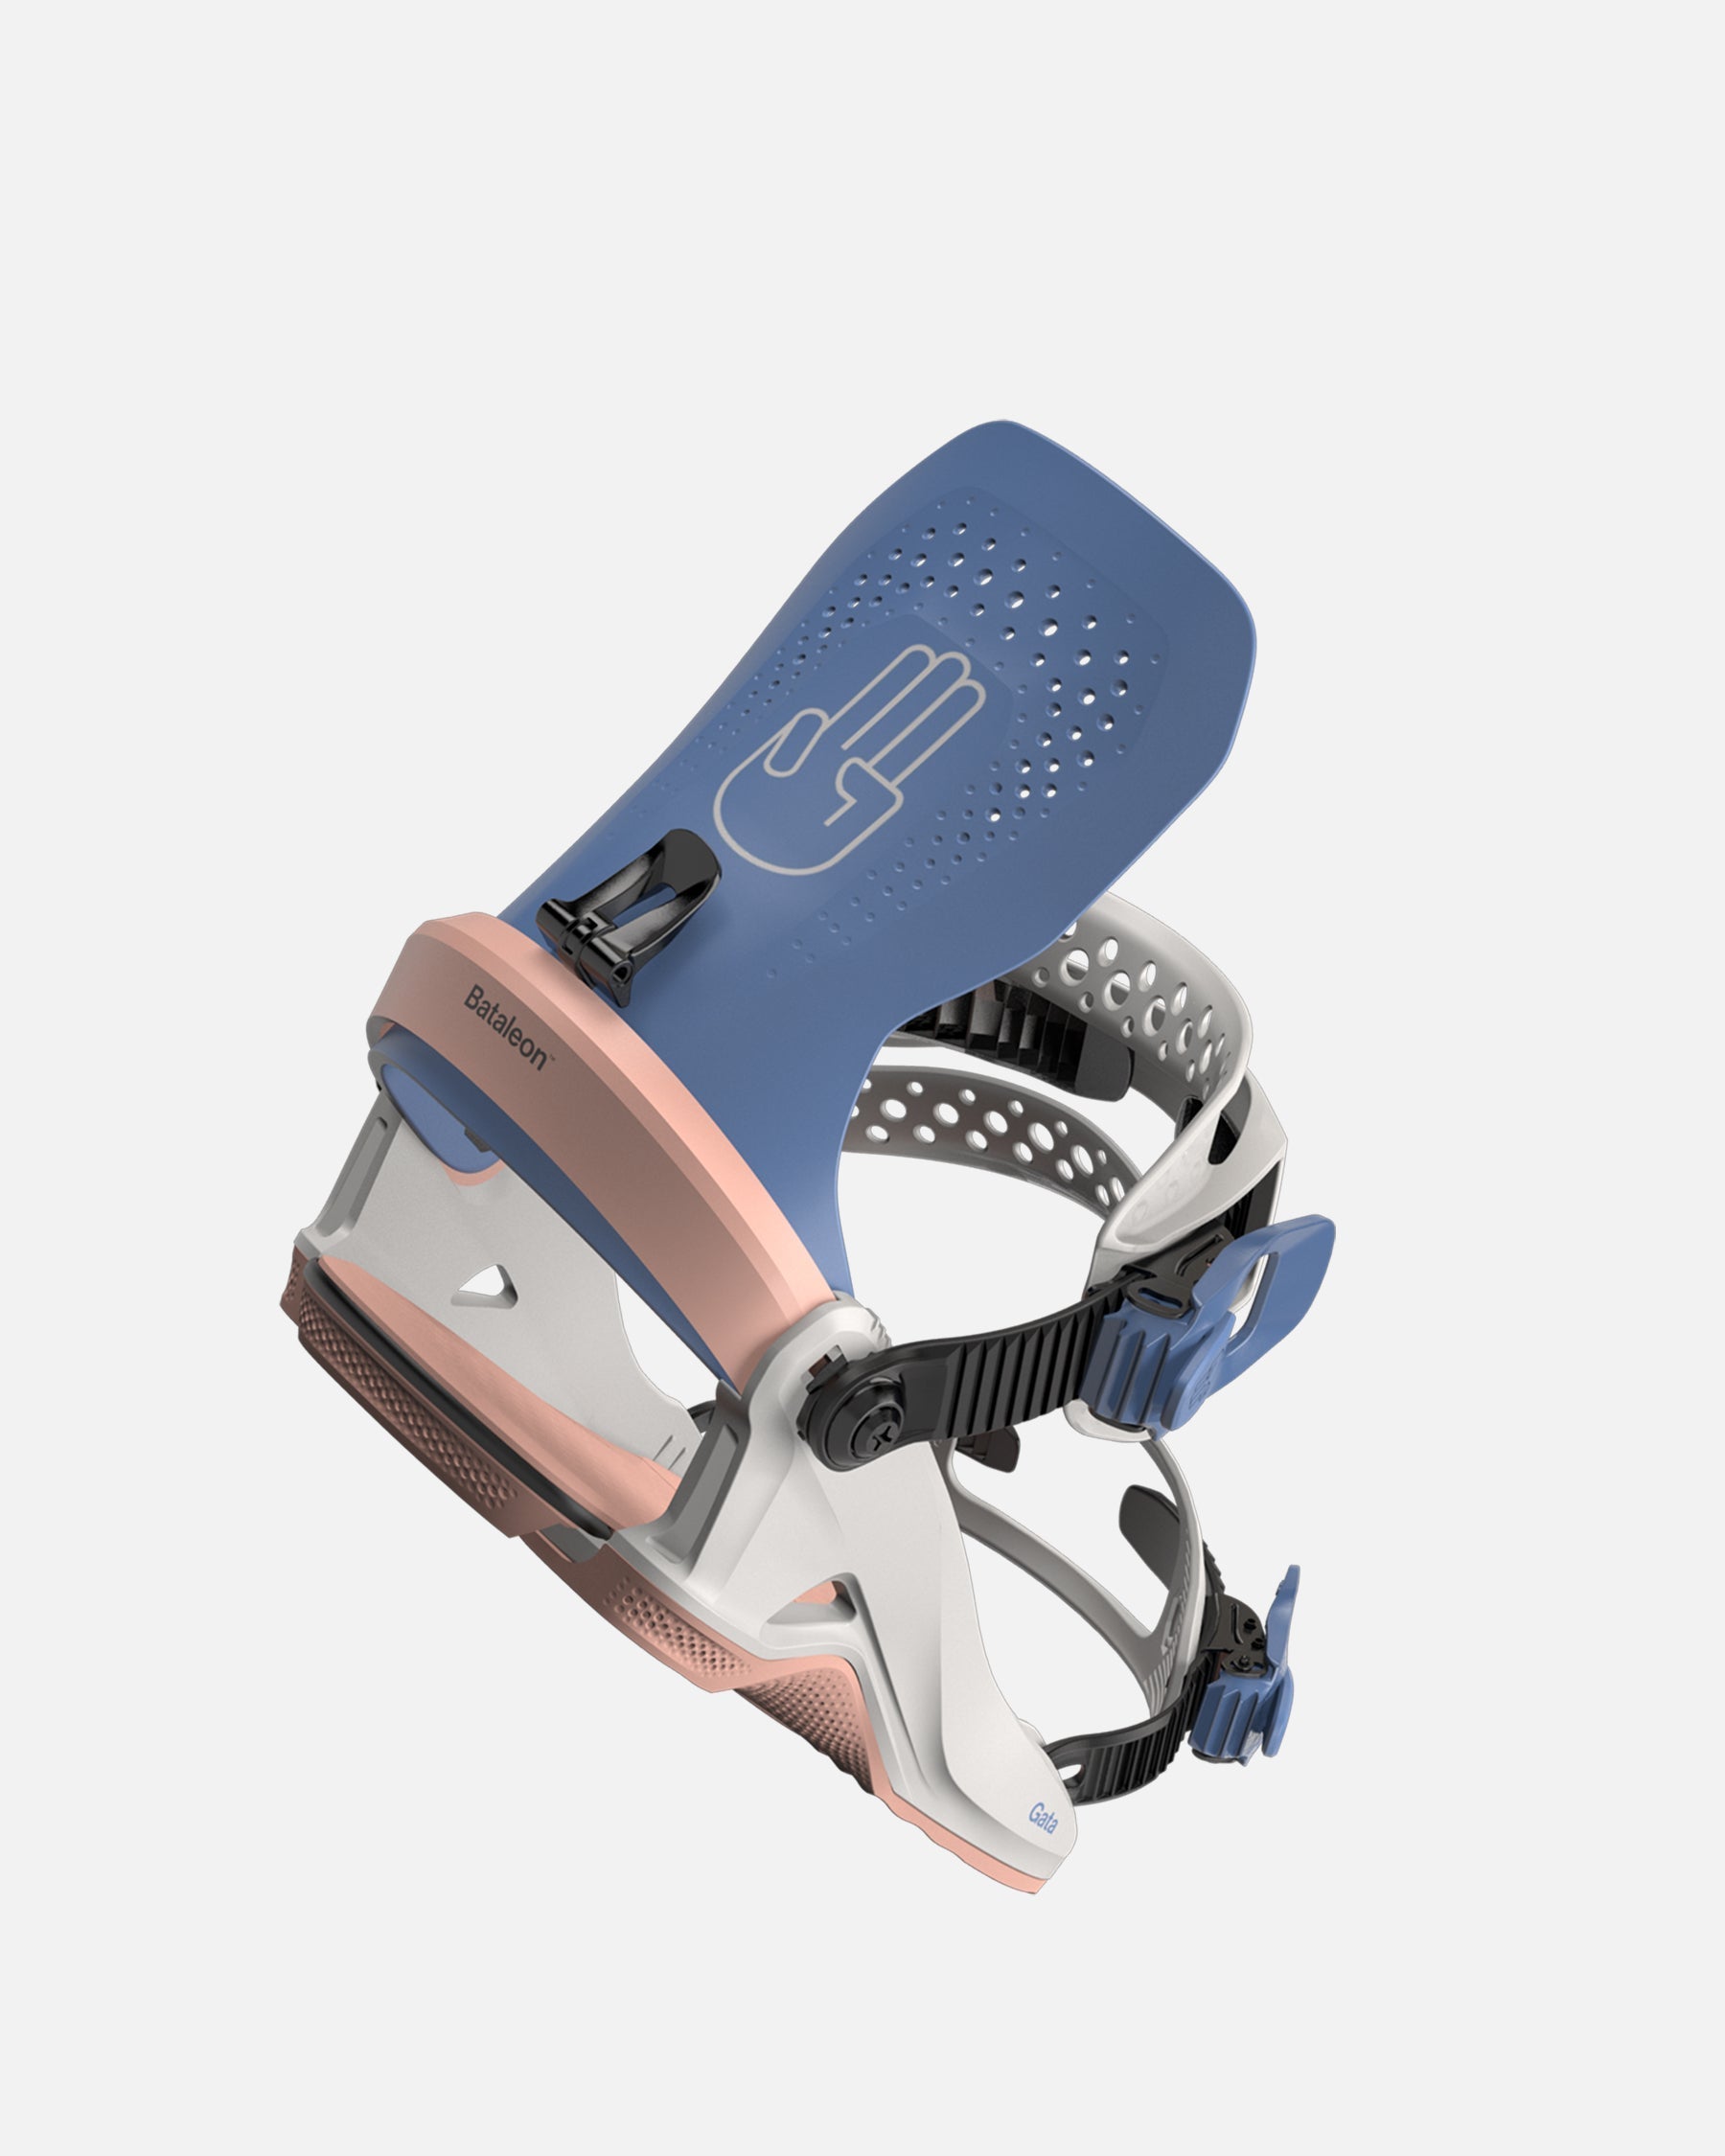 Bataleon gata heelwrap 2023-2024 lavender glacier gray womens snowboard bindings one